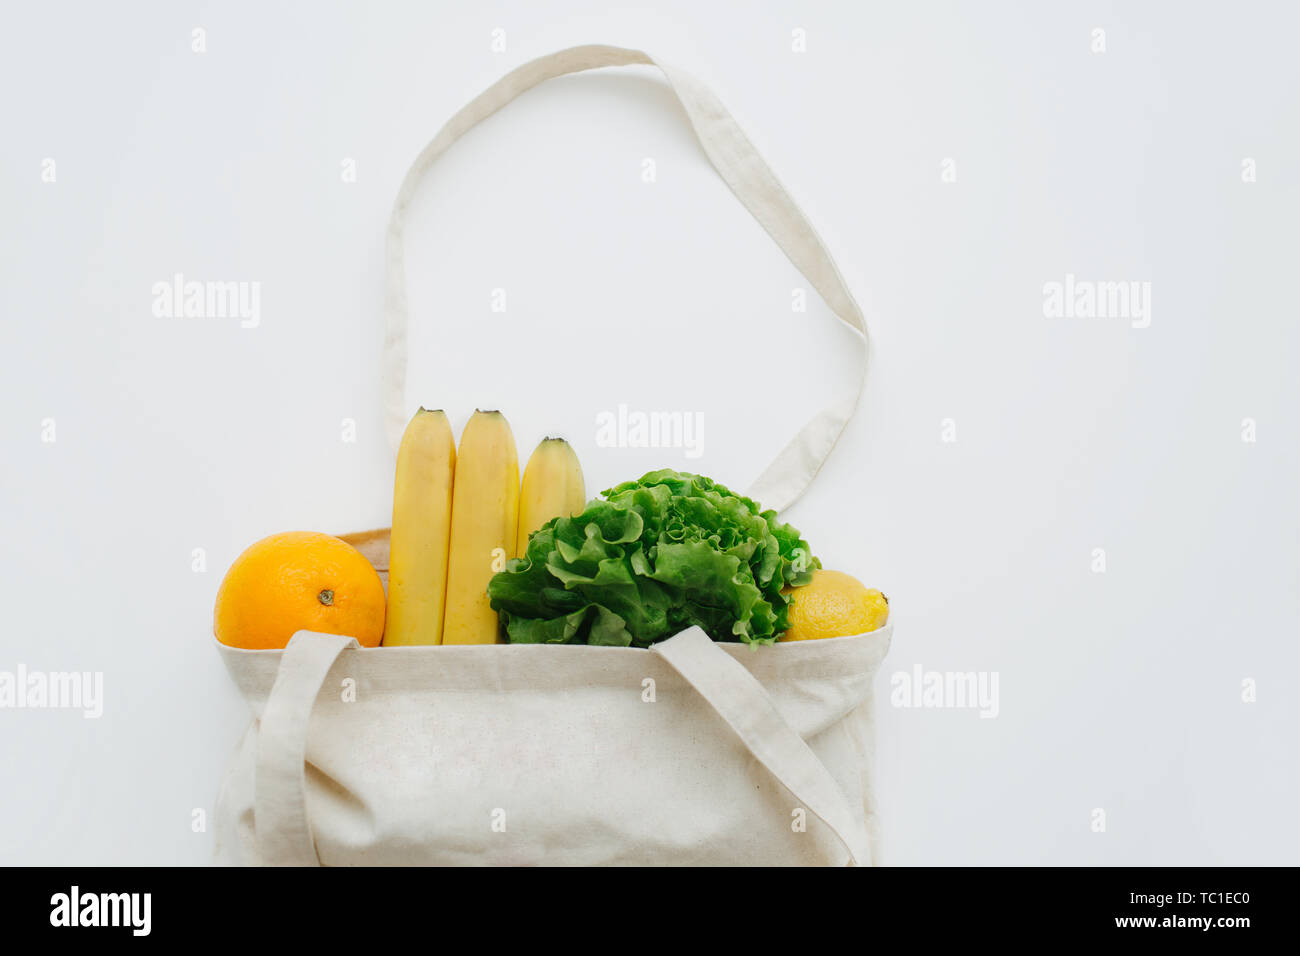 Download Salad A Plastic Bag Stock Photos Salad A Plastic Bag Stock Images Alamy Yellowimages Mockups